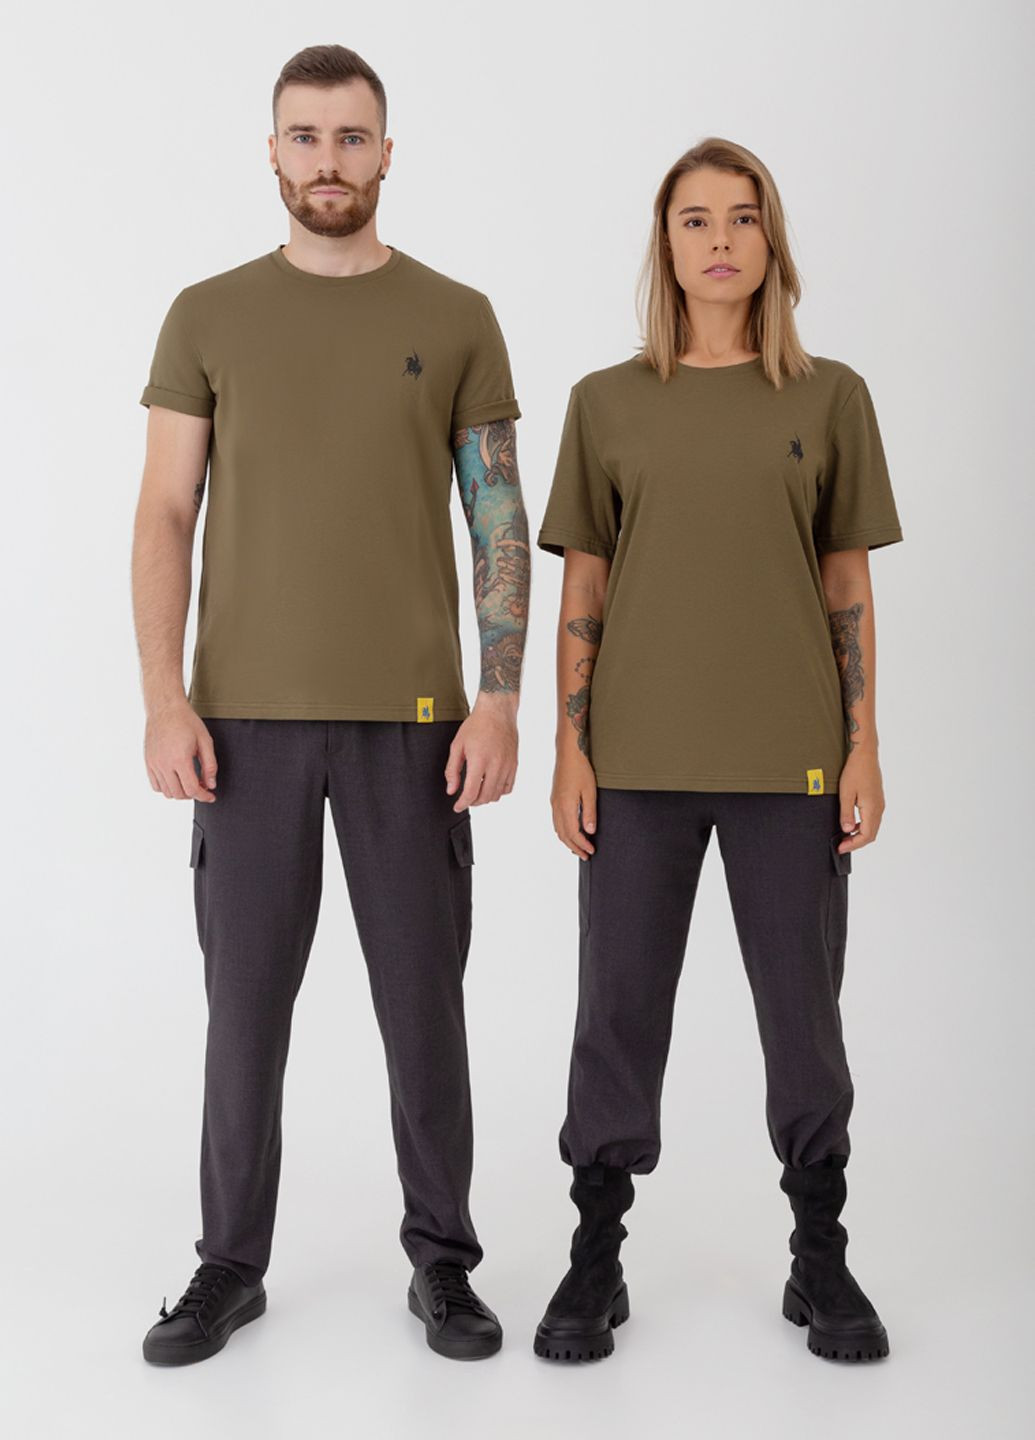 Хаки (оливковая) футболка мужская freedom хаки Arber T-SHIRT FF19